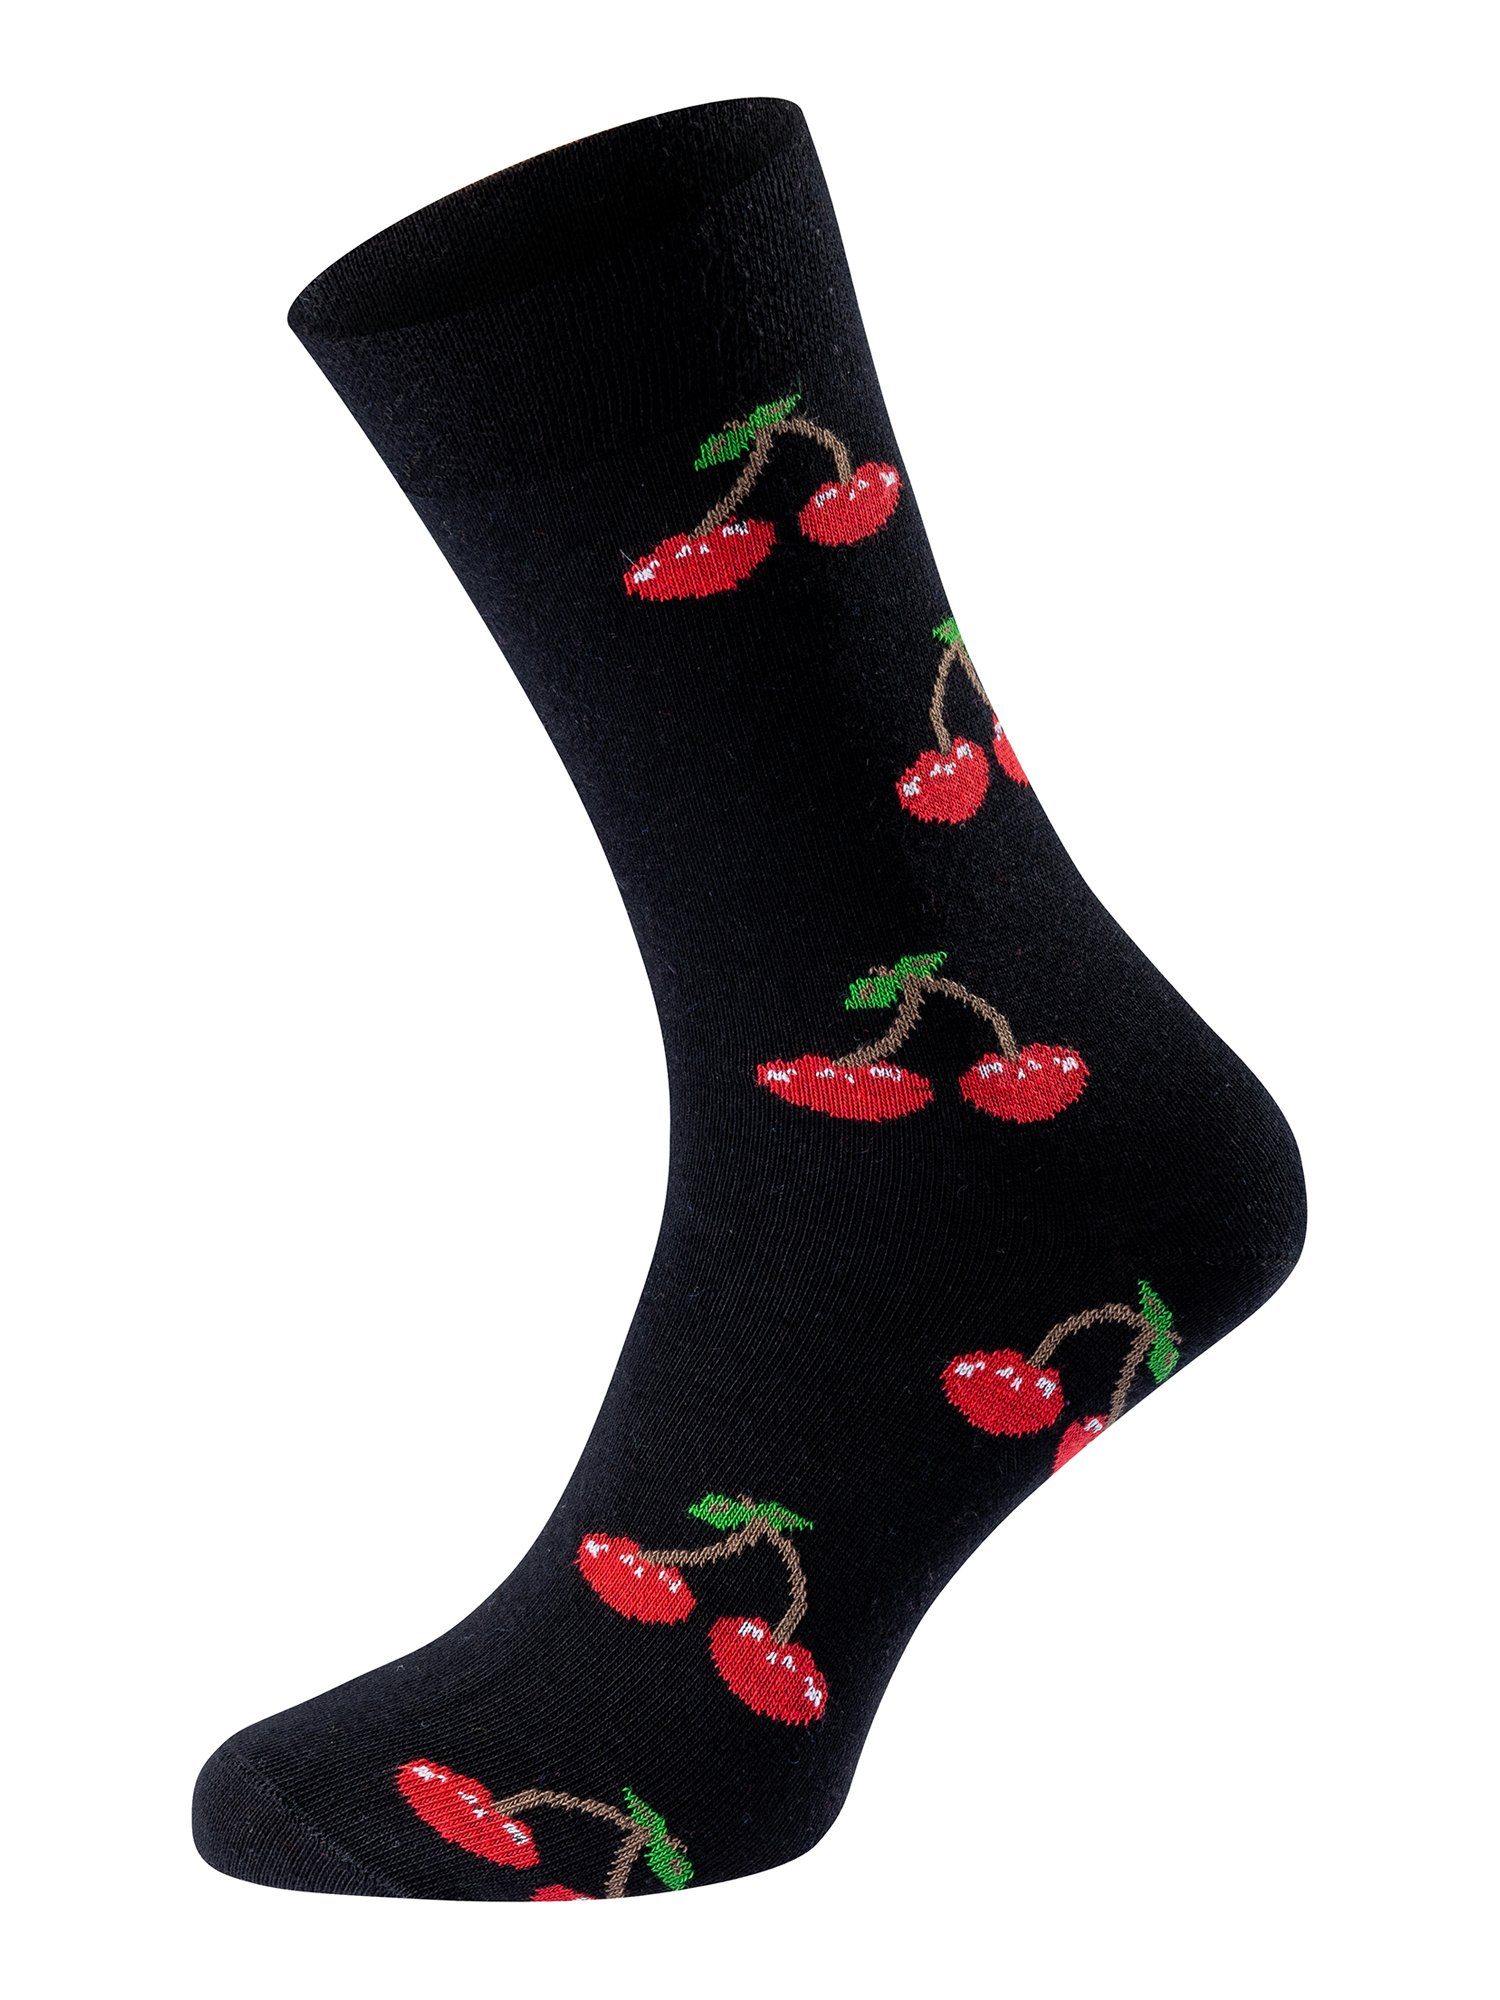 Chili Lifestyle Freizeitsocken Banderole Leisure Socks Cherry